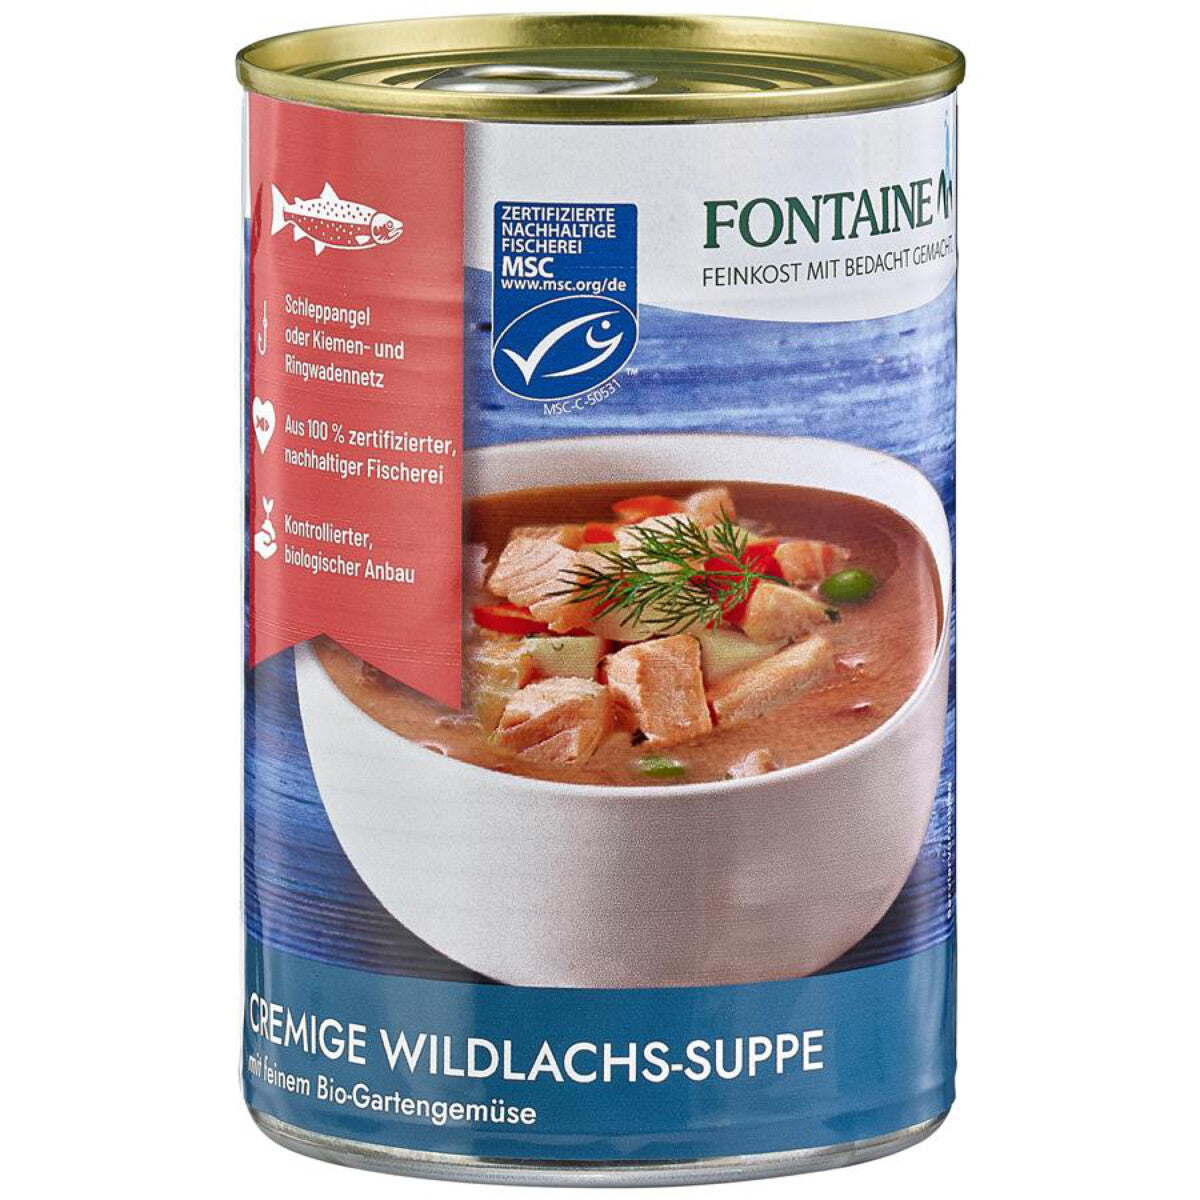 FONTAINE Cremige Wildlachs-Suppe 400 g